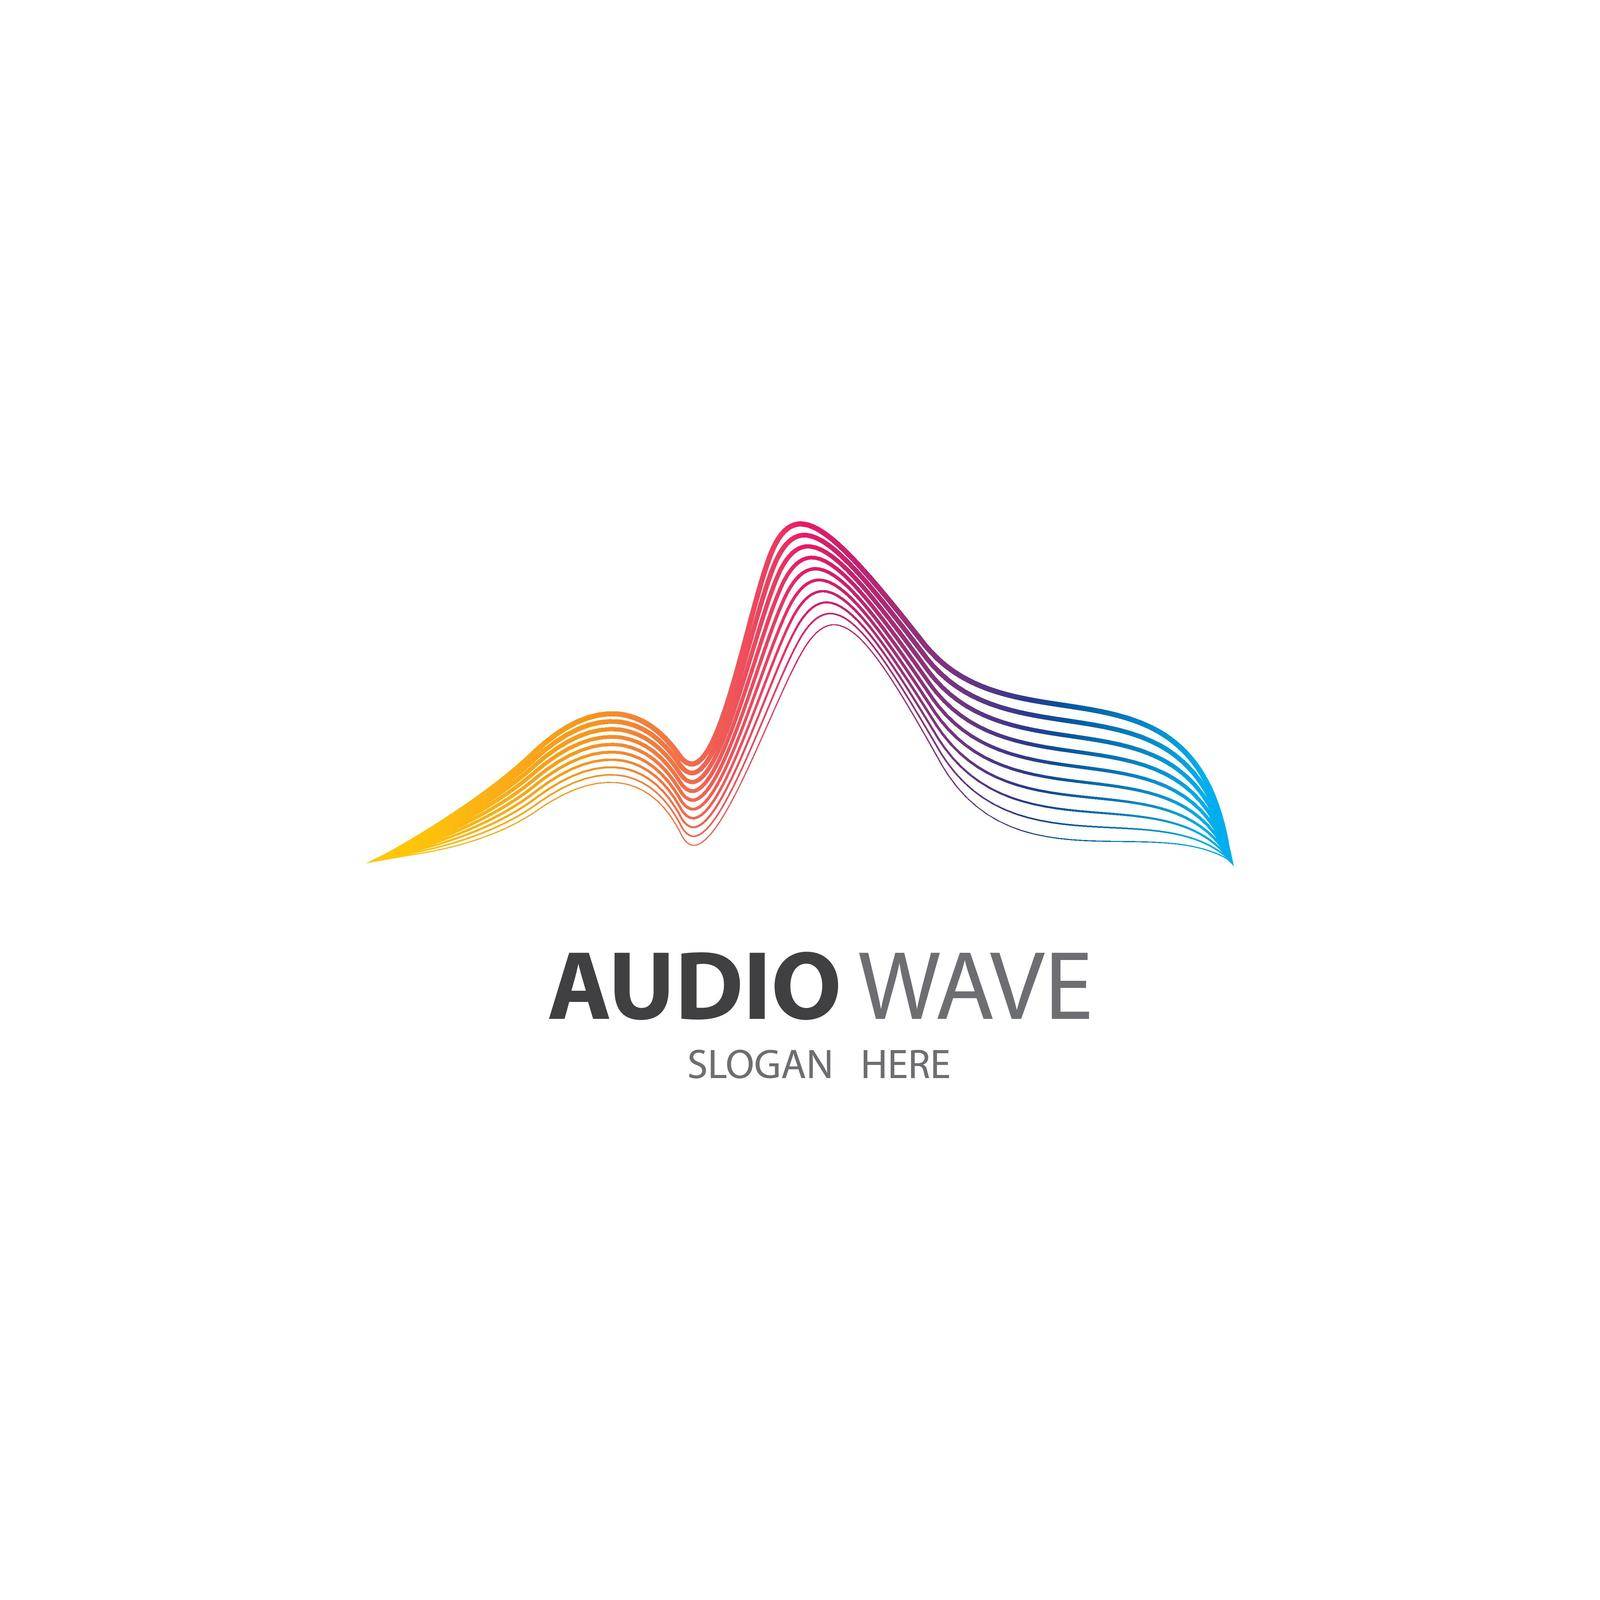 Audio wave images illustration design